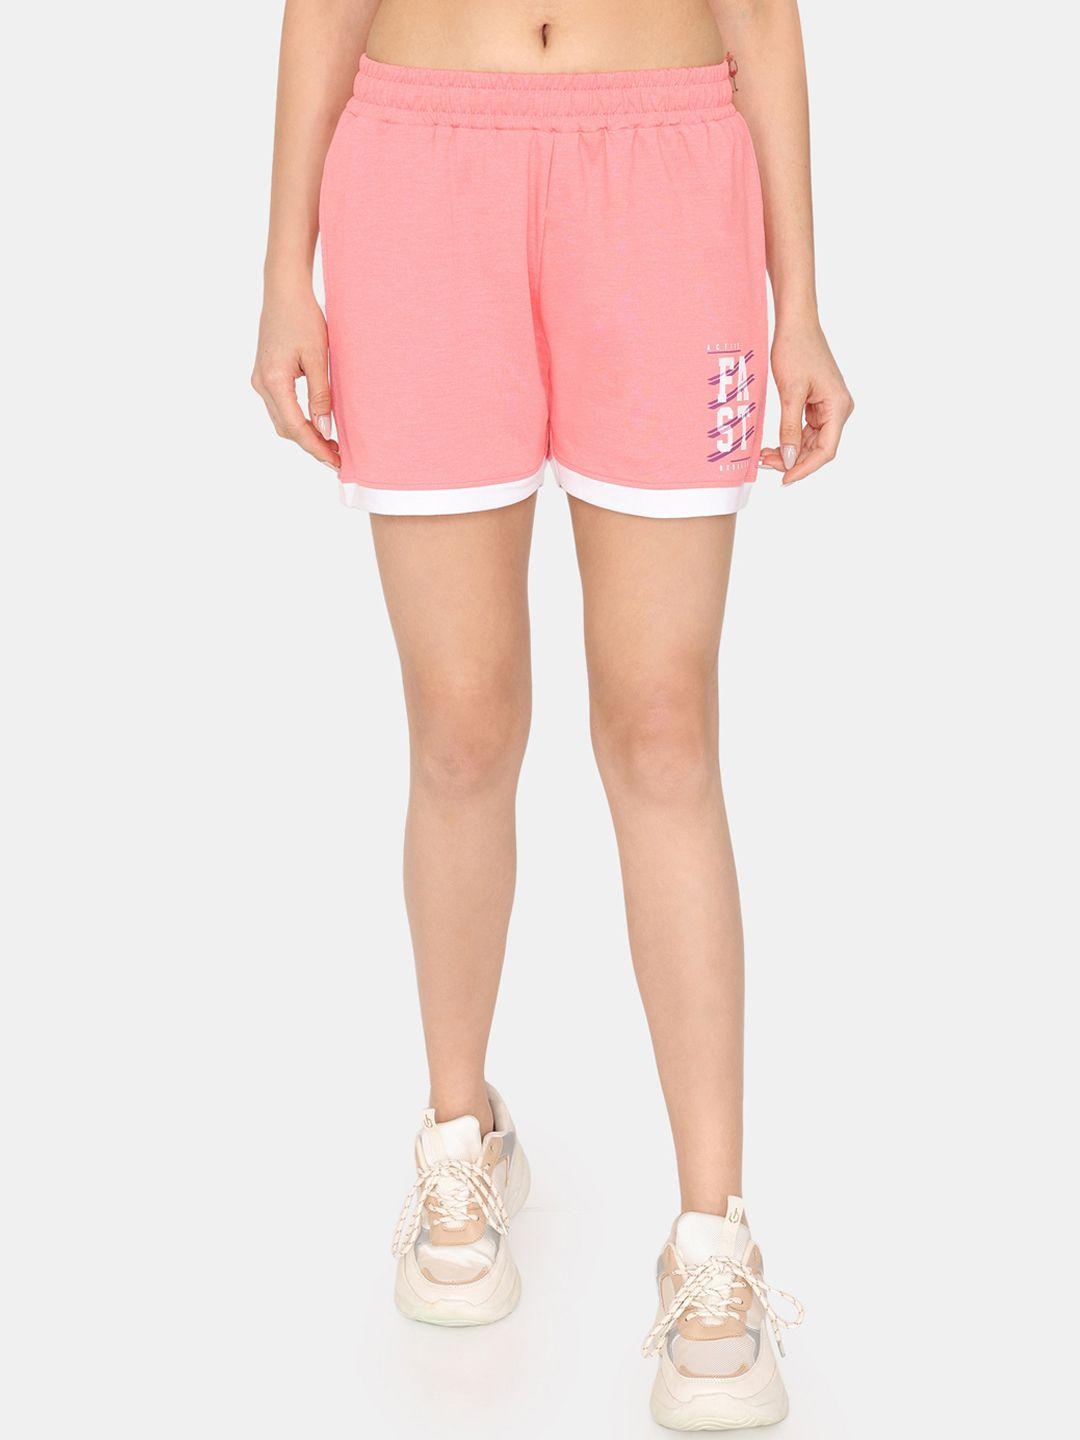 rosaline by zivame women mid-rise sports shorts